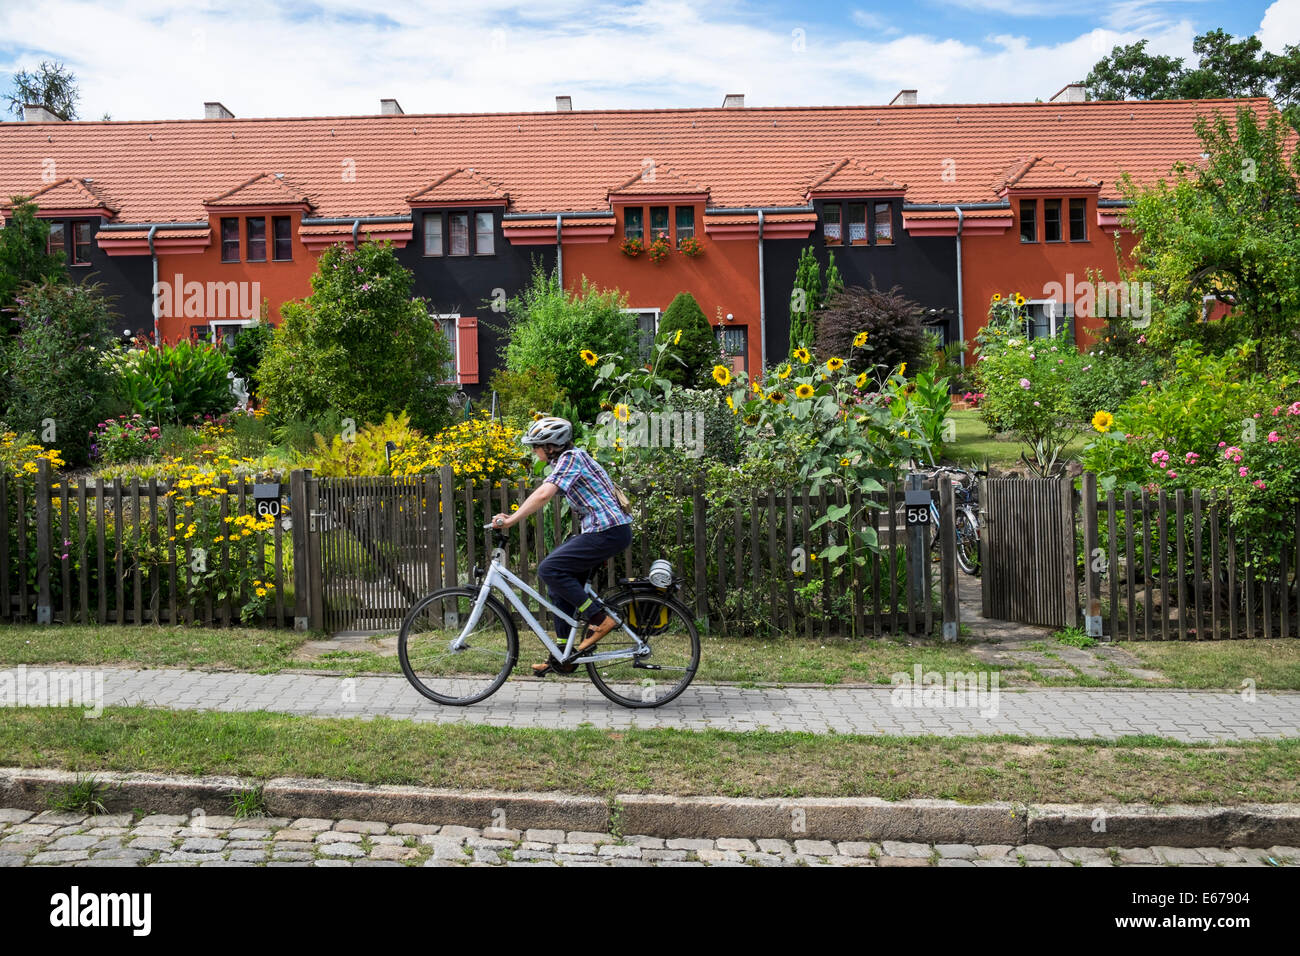 Gartenstadt , (Garden city), housing estate a UNESCO world Heritage site at Falkenberg in Berlin Germany Stock Photo